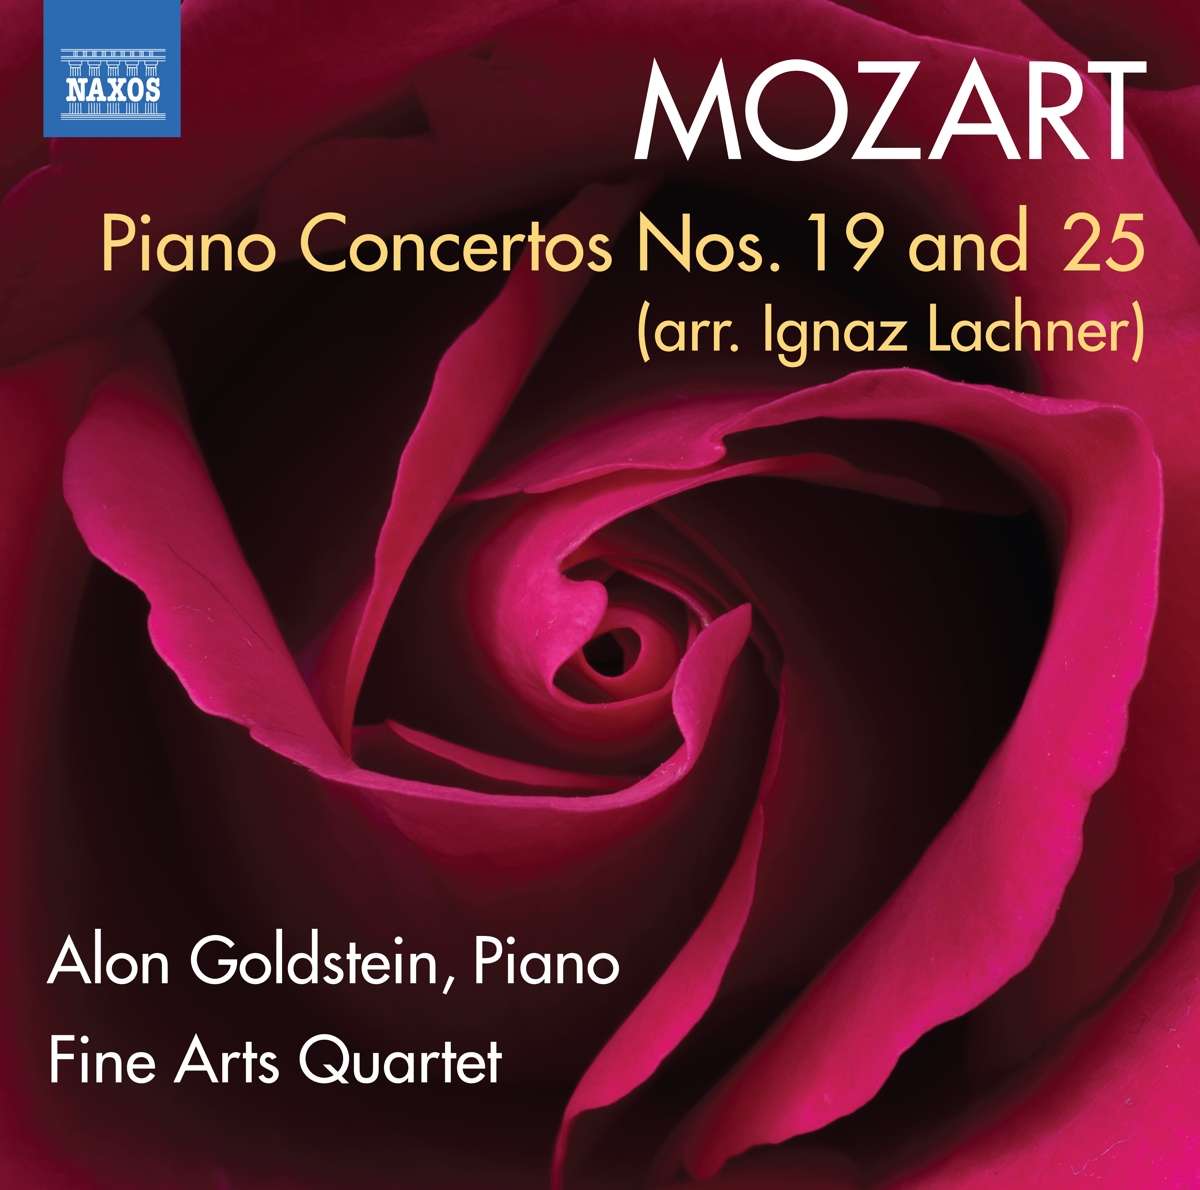 Goldstein, Alon & Fine Arts Quartet - Mozart: Piano Concertos Nos. 19 and 25 (Arr. Ignaz Lachner)